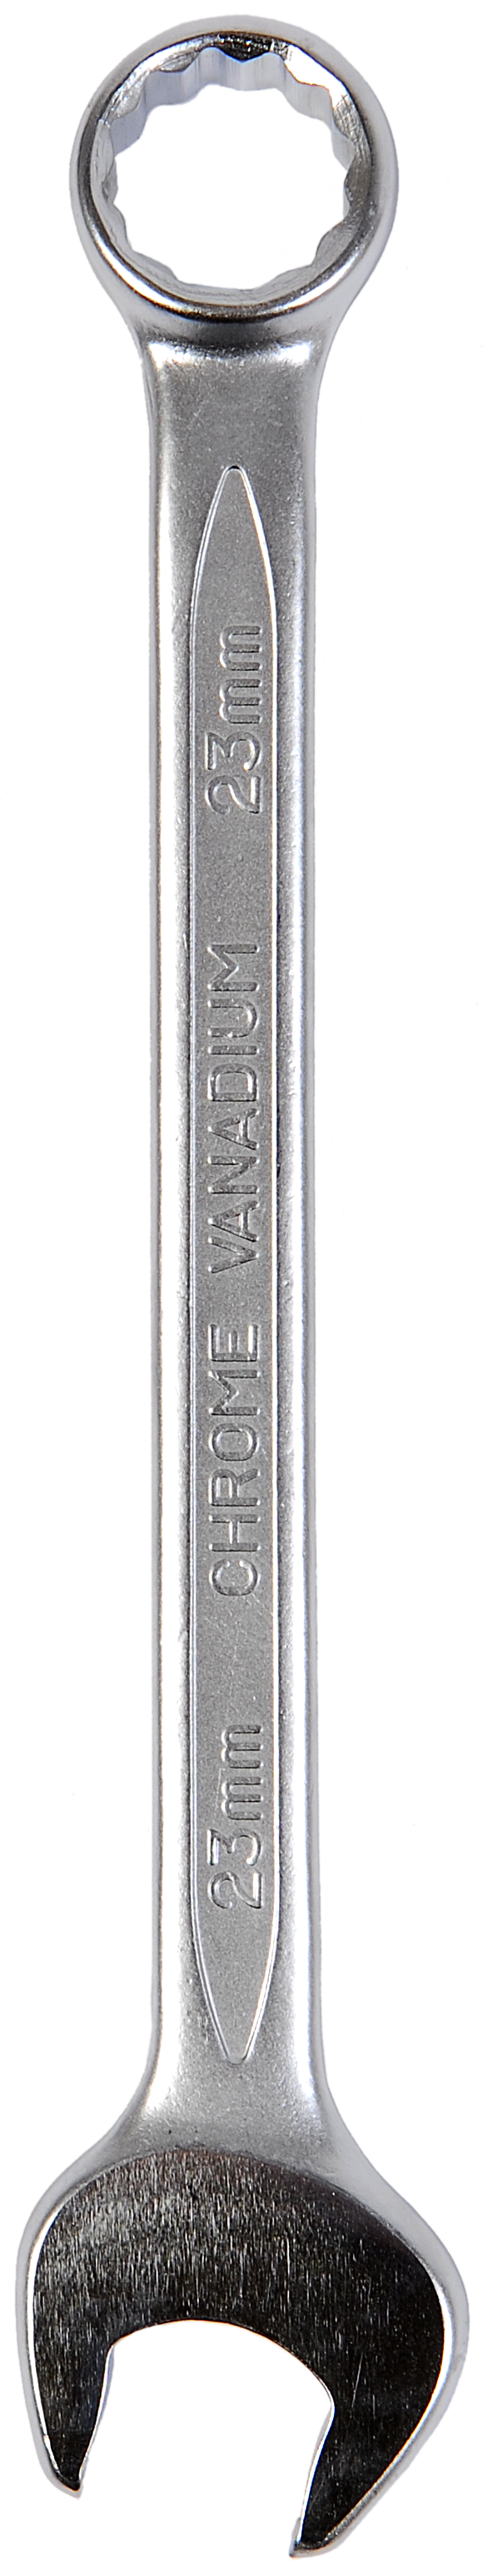 Stanley Slimline Combination Wrench 23mm